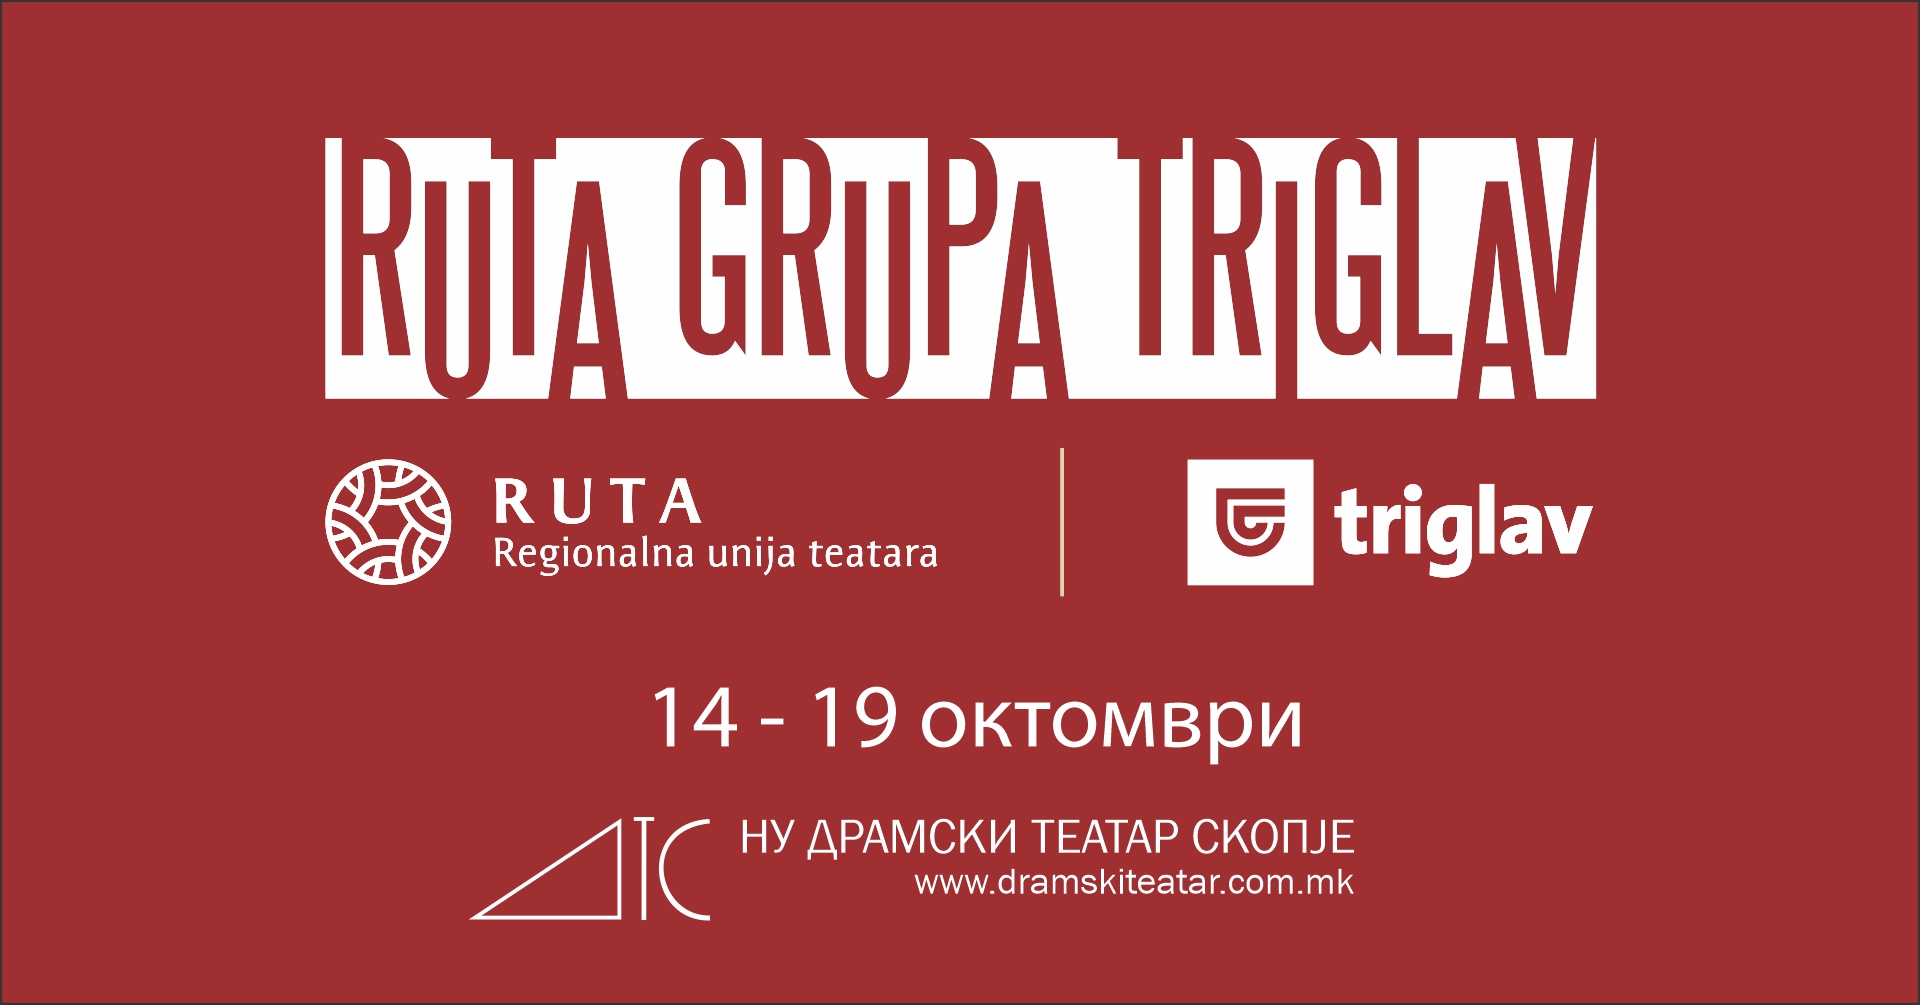 Графика за објава RUTA GRUPA TRIGLAV 1